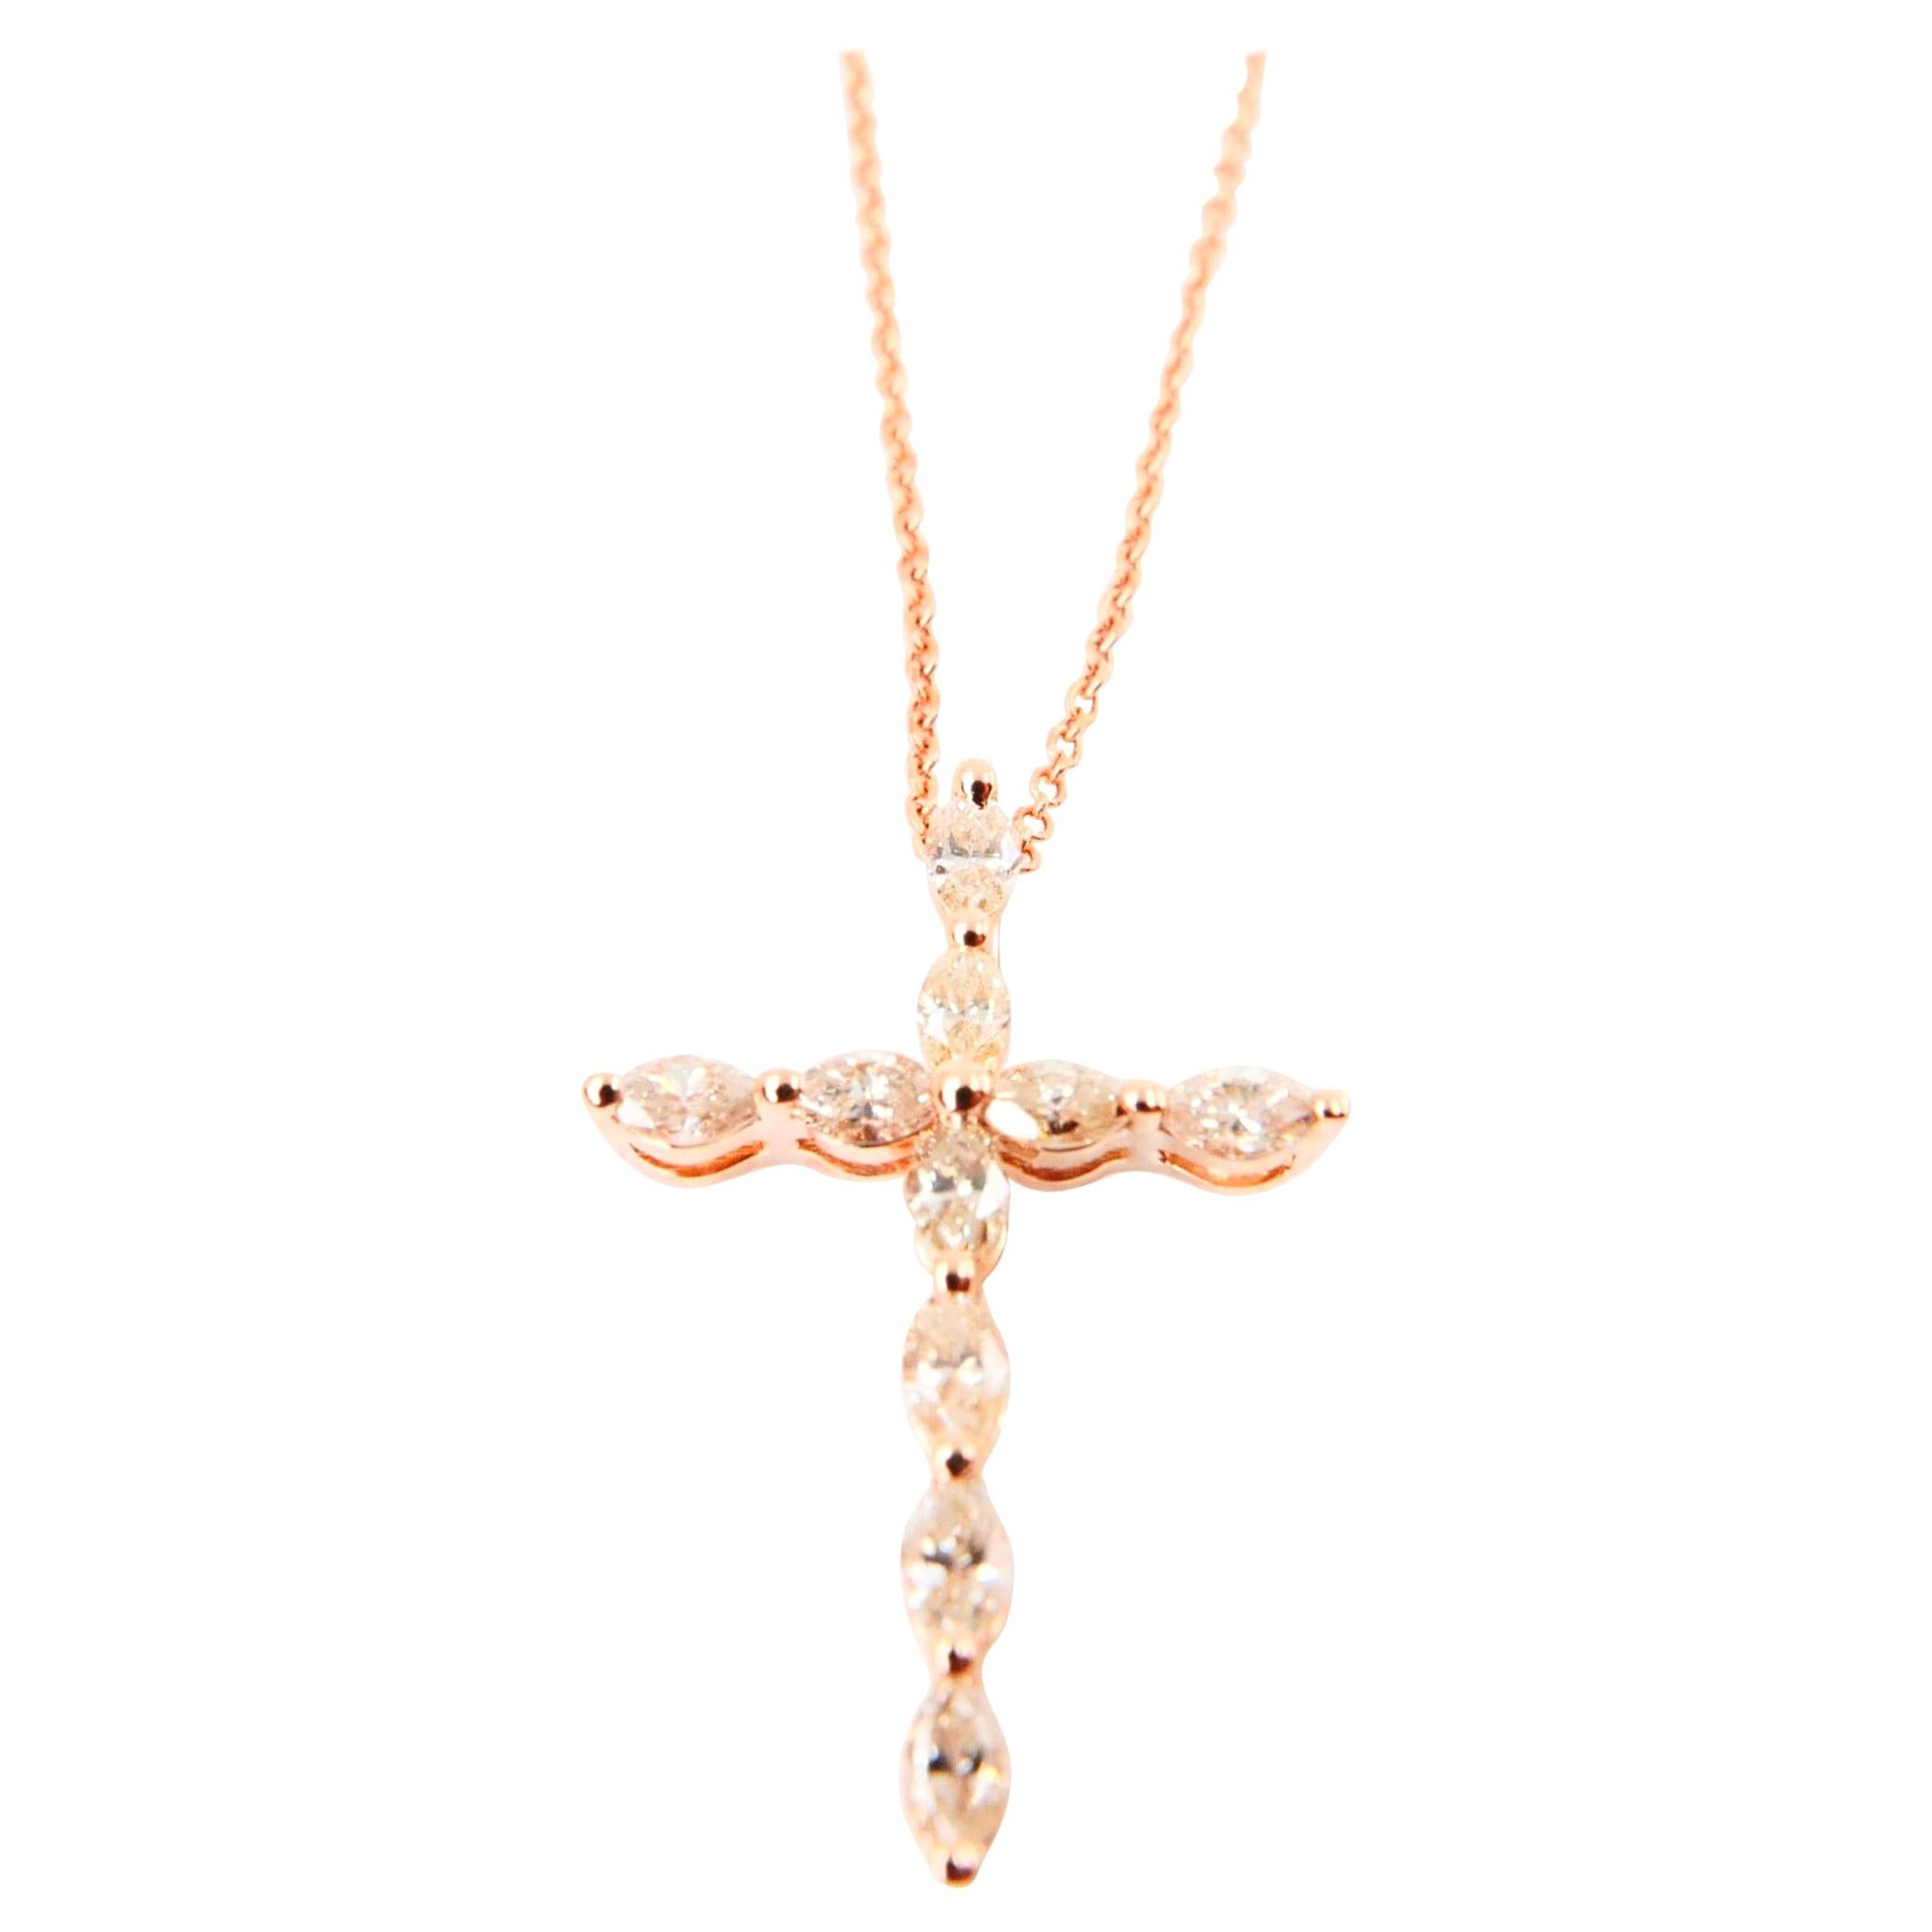 Classic 0.52 Carat Marquise Diamond Cross Pendant Necklace Set in 18 Karat Gold